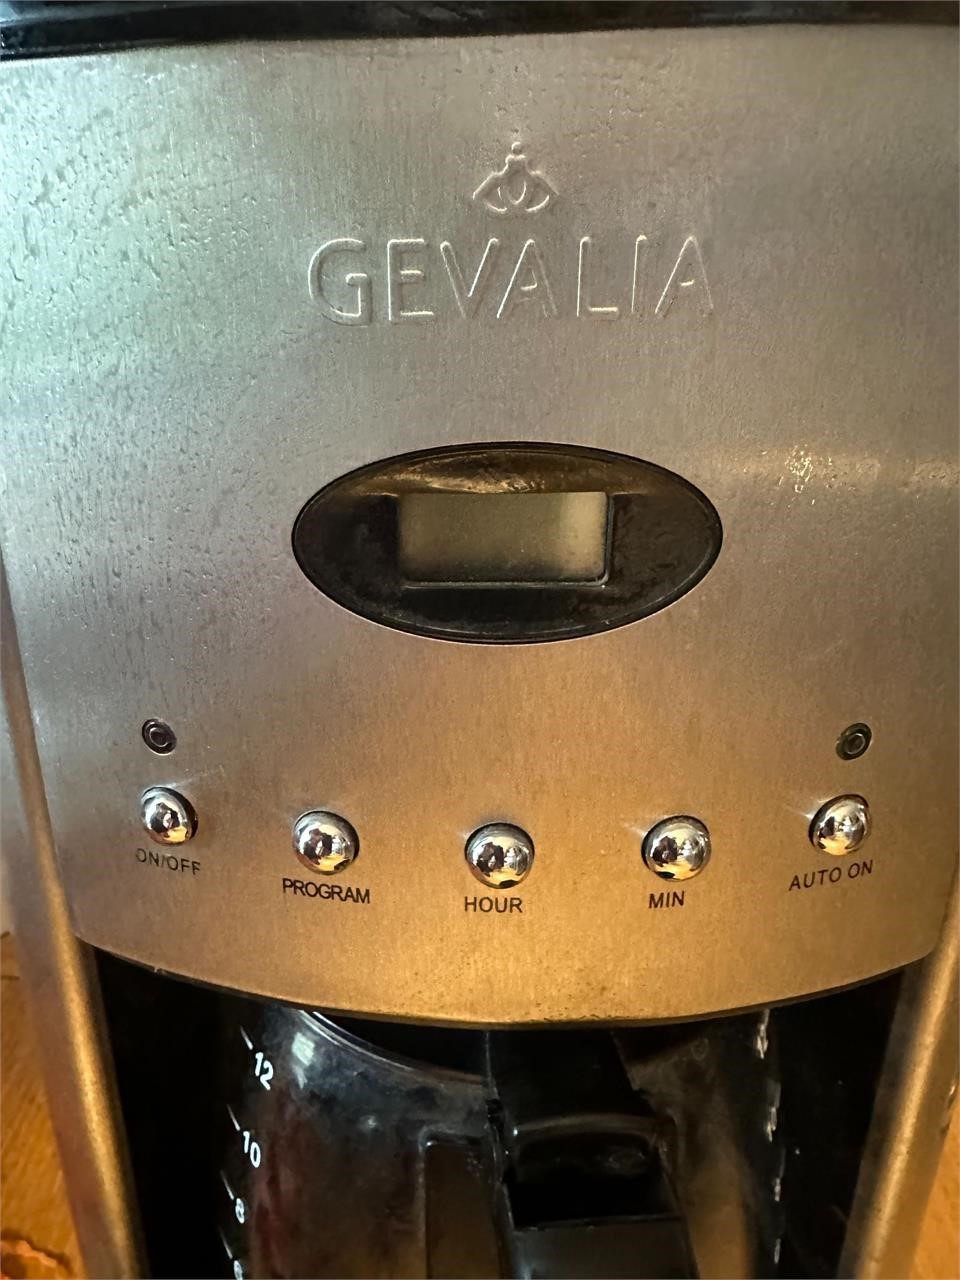 Gevalia Coffee Maker